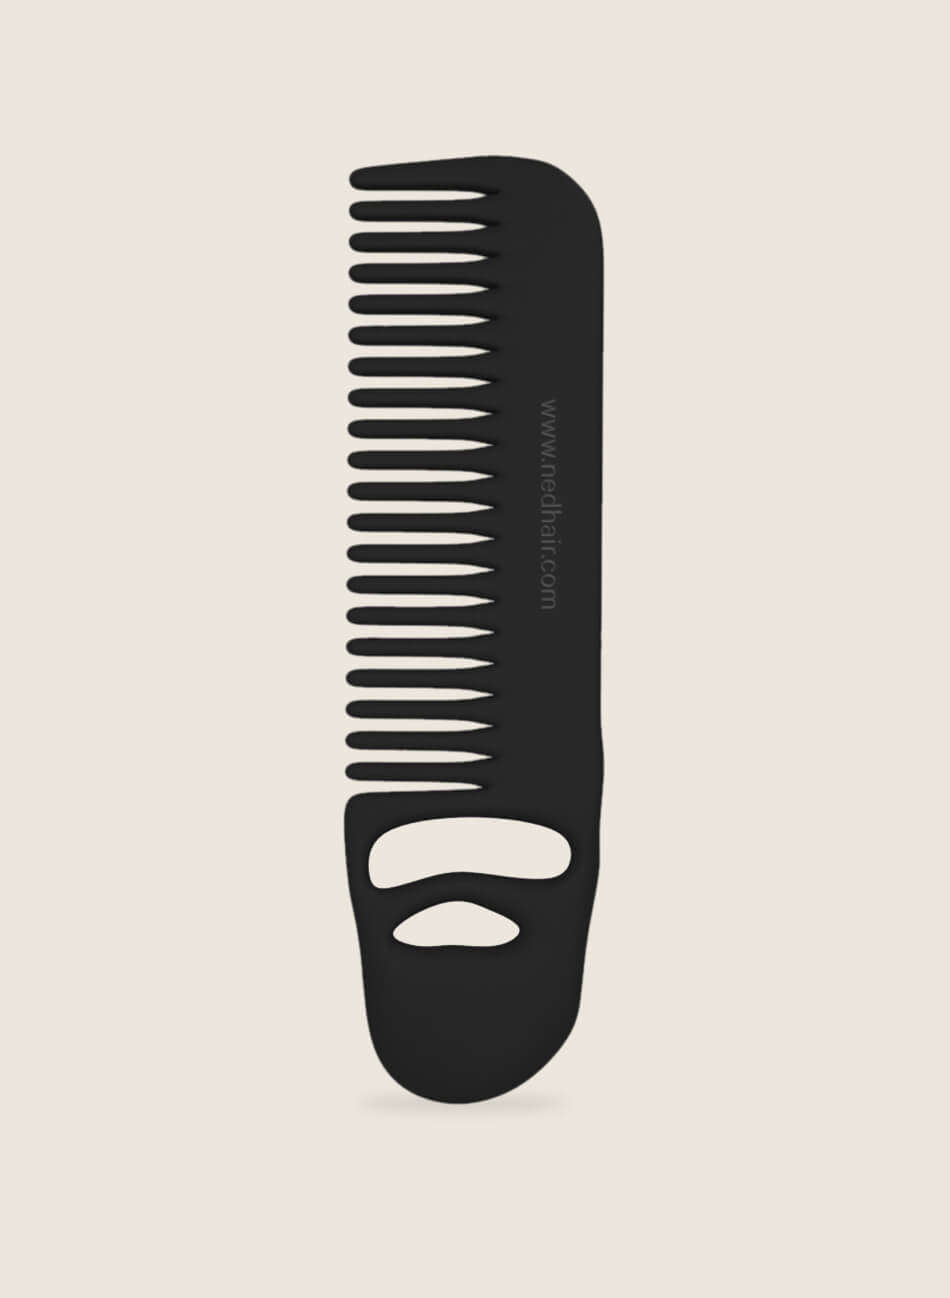 beard oil comb - NED beast comb - best beard comb australia - Men's comb